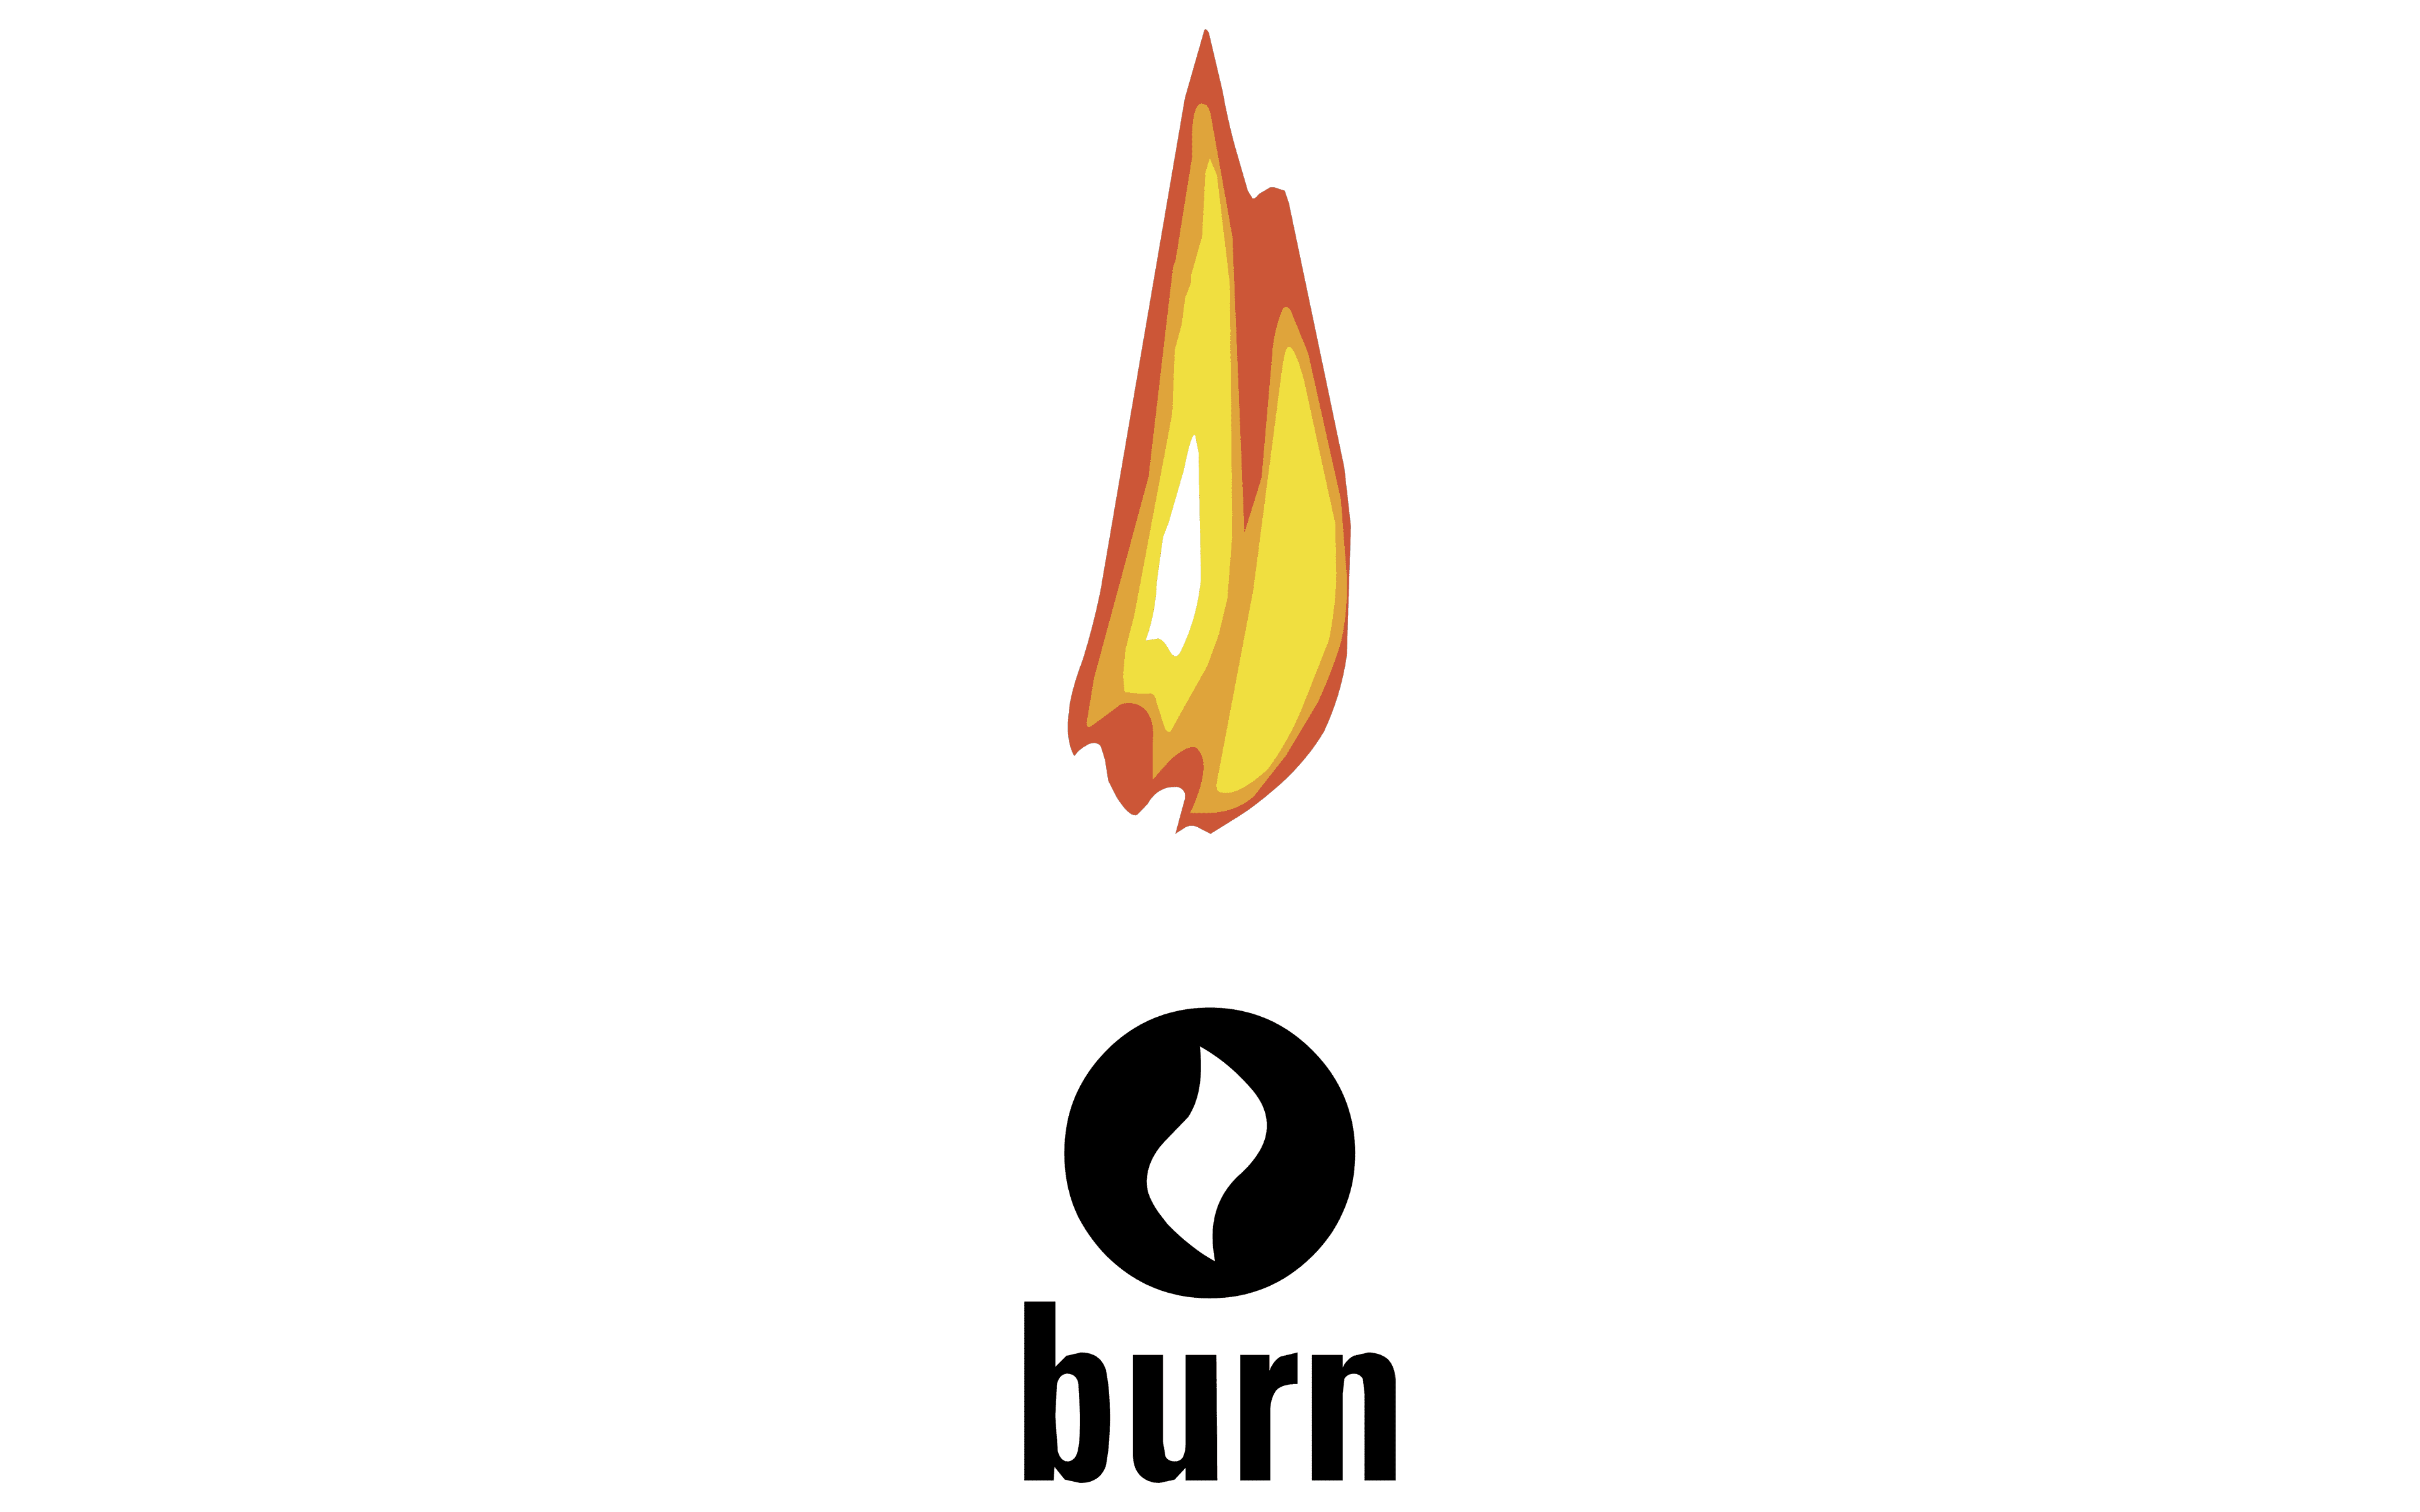 PNG-Bild brennen